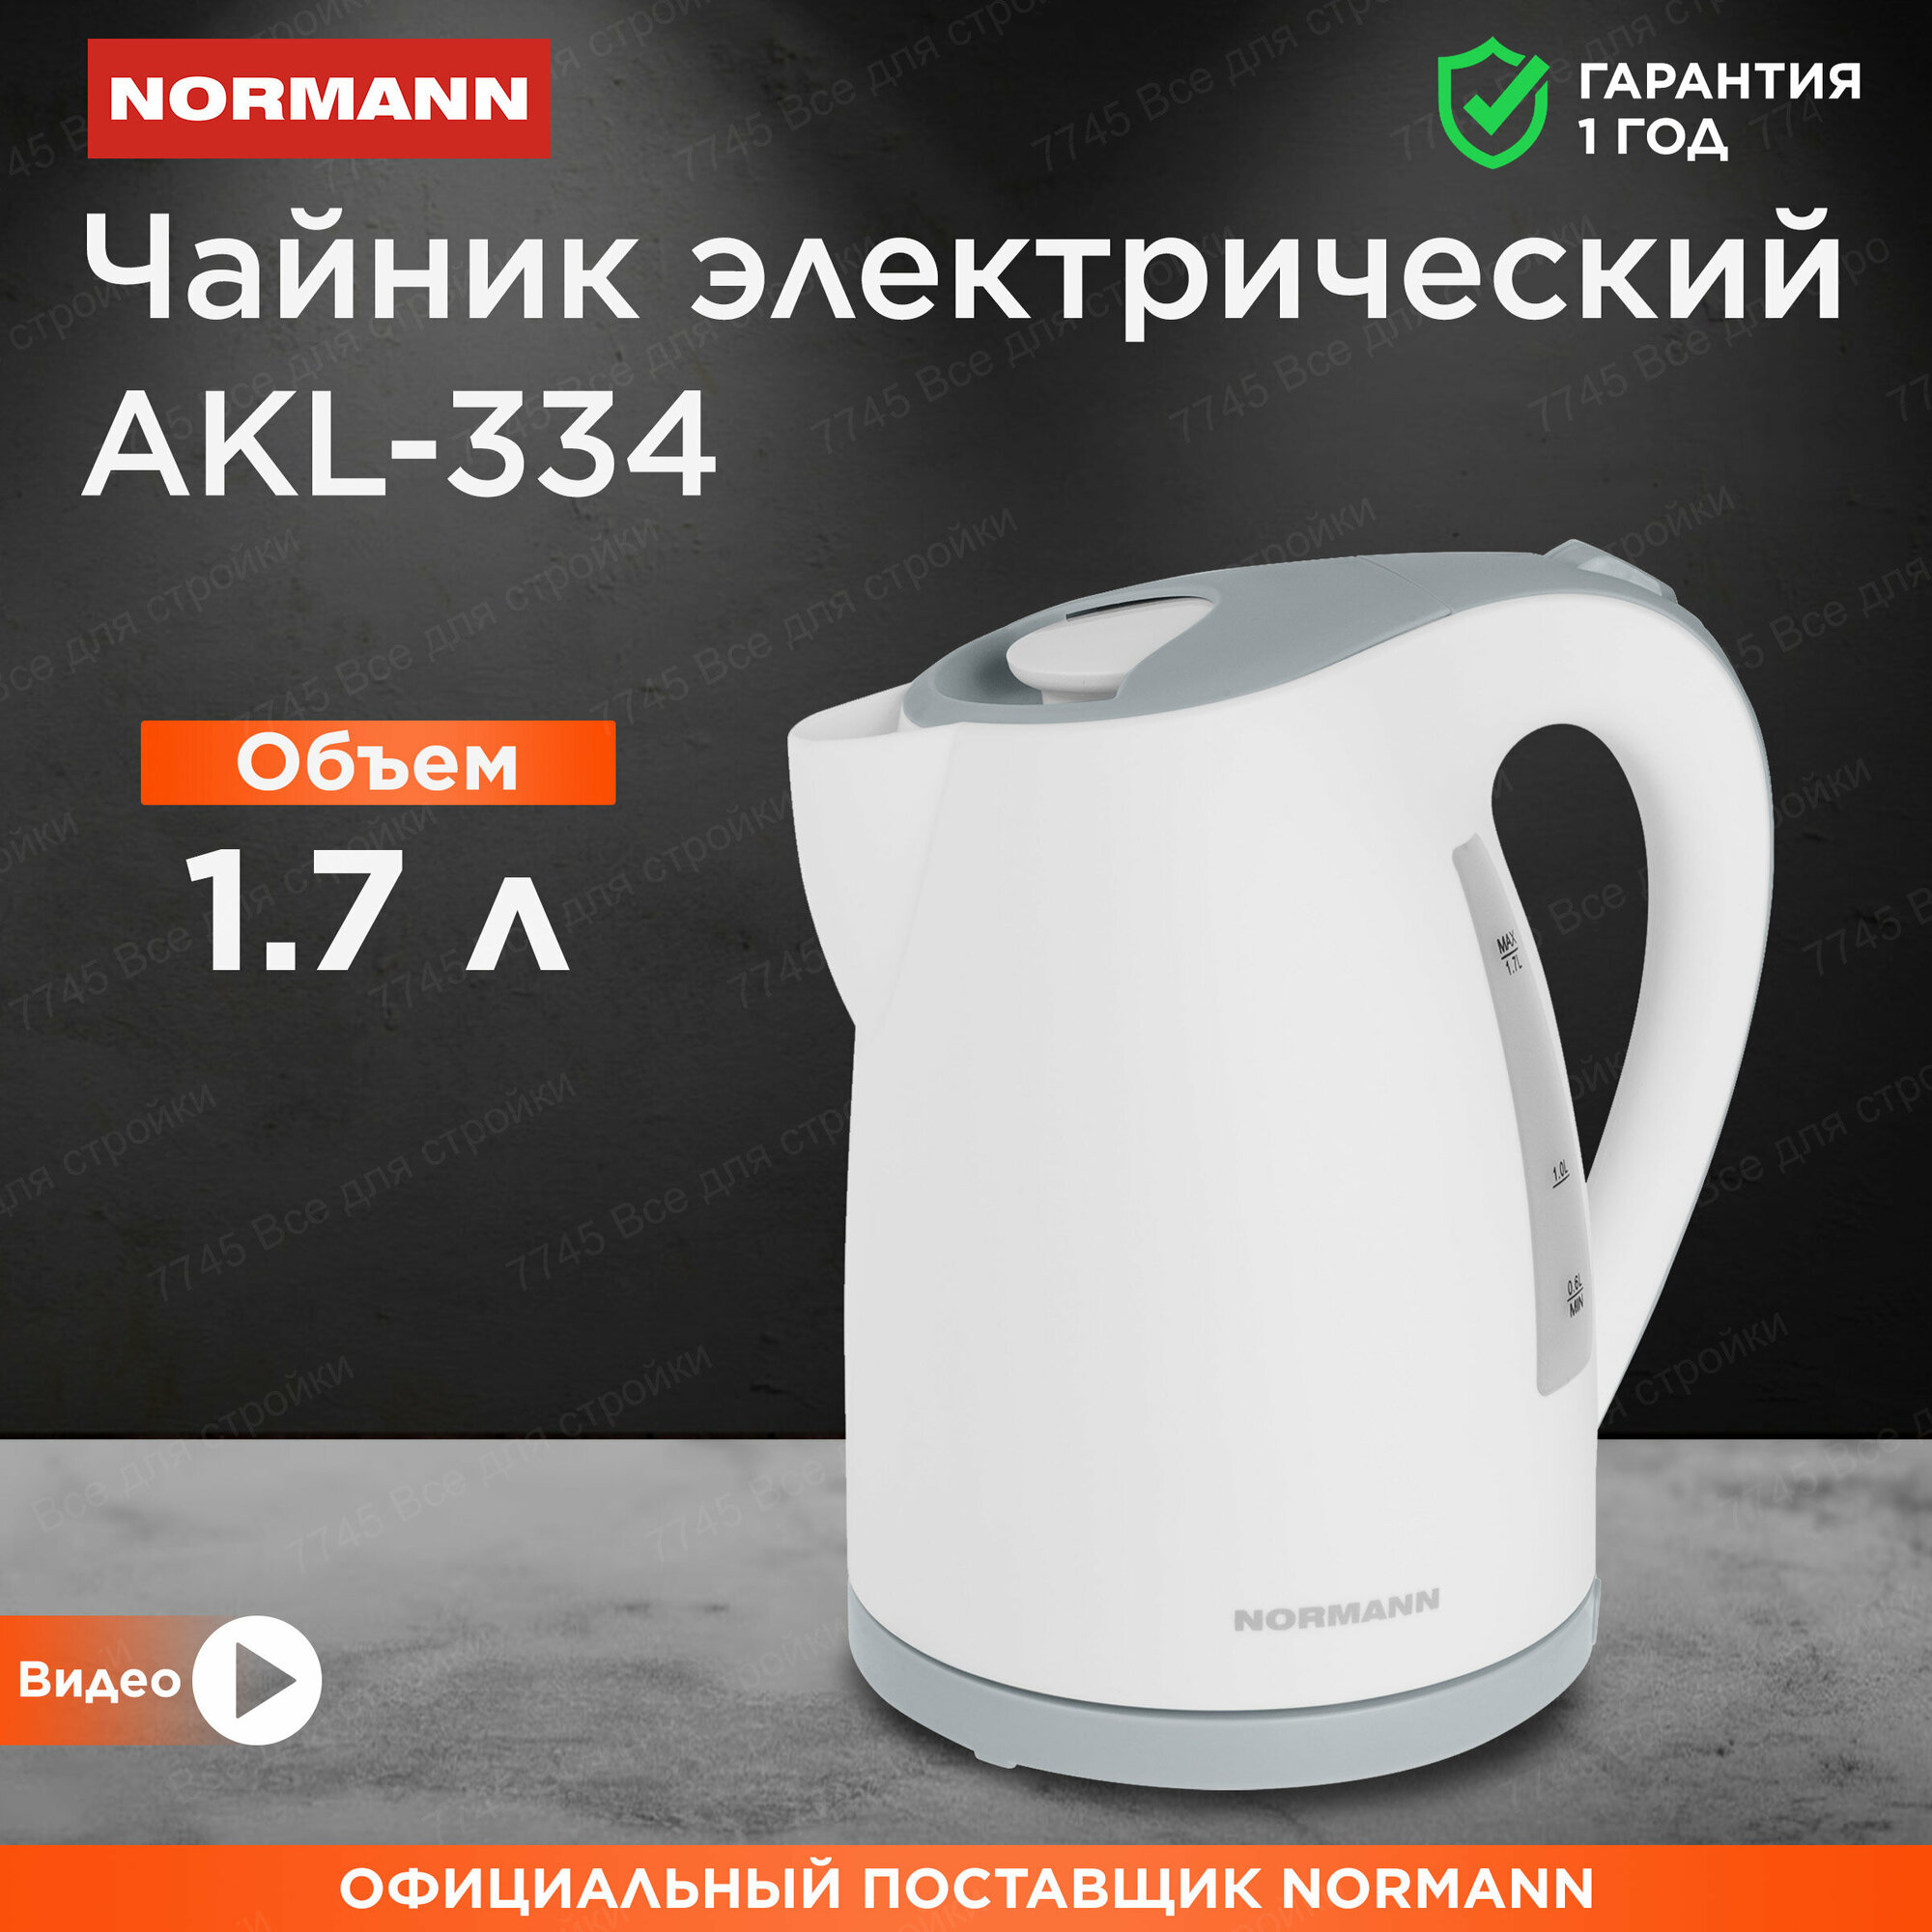 Чайник электрический 1,7 л белый серый NORMANN AKL-334